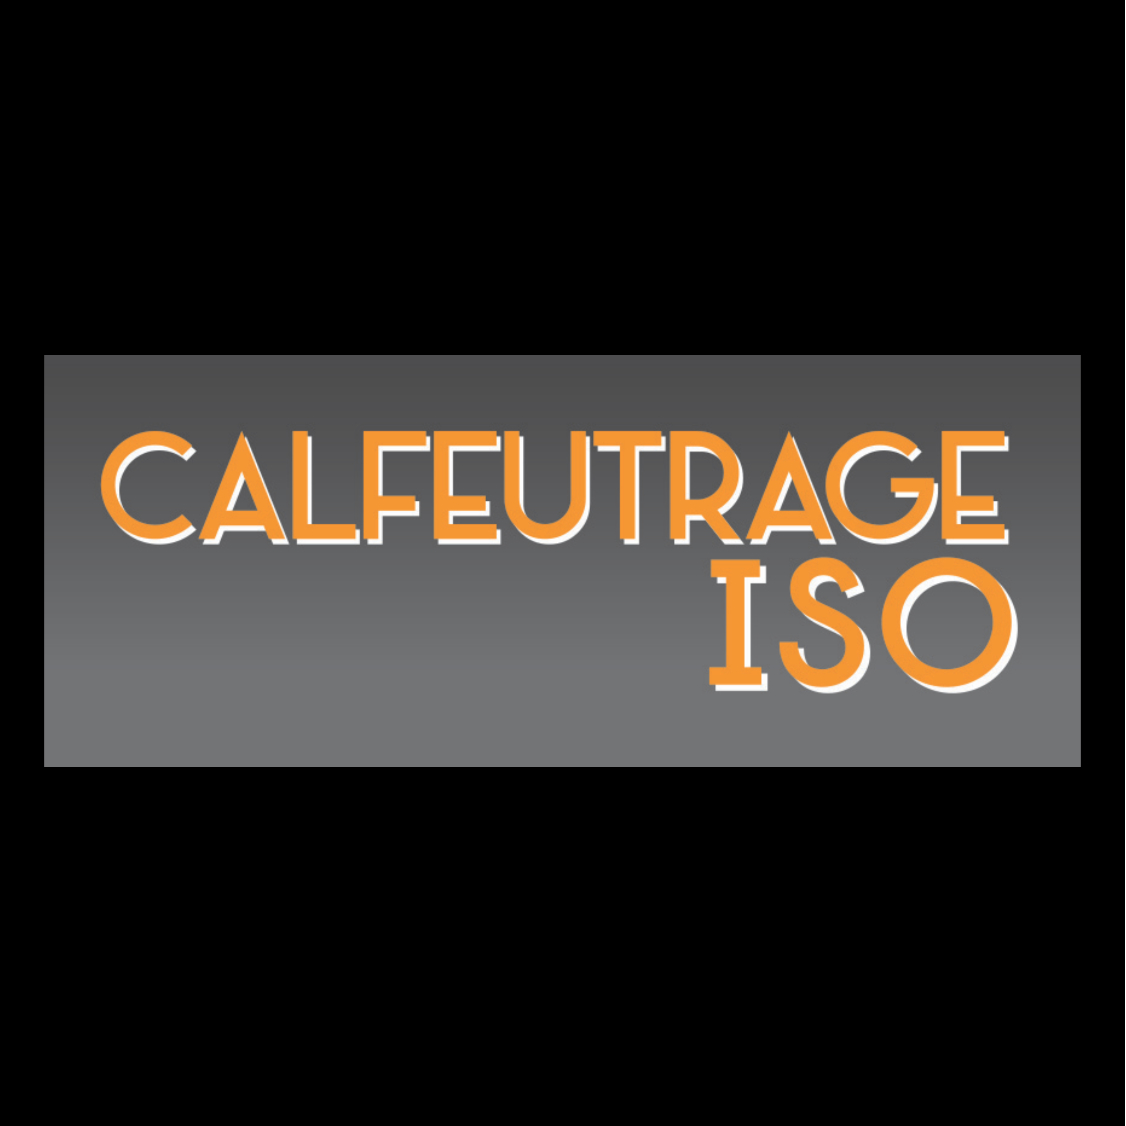 Calfeutrage ISO | Calfeutrage Laval - Office Buildings